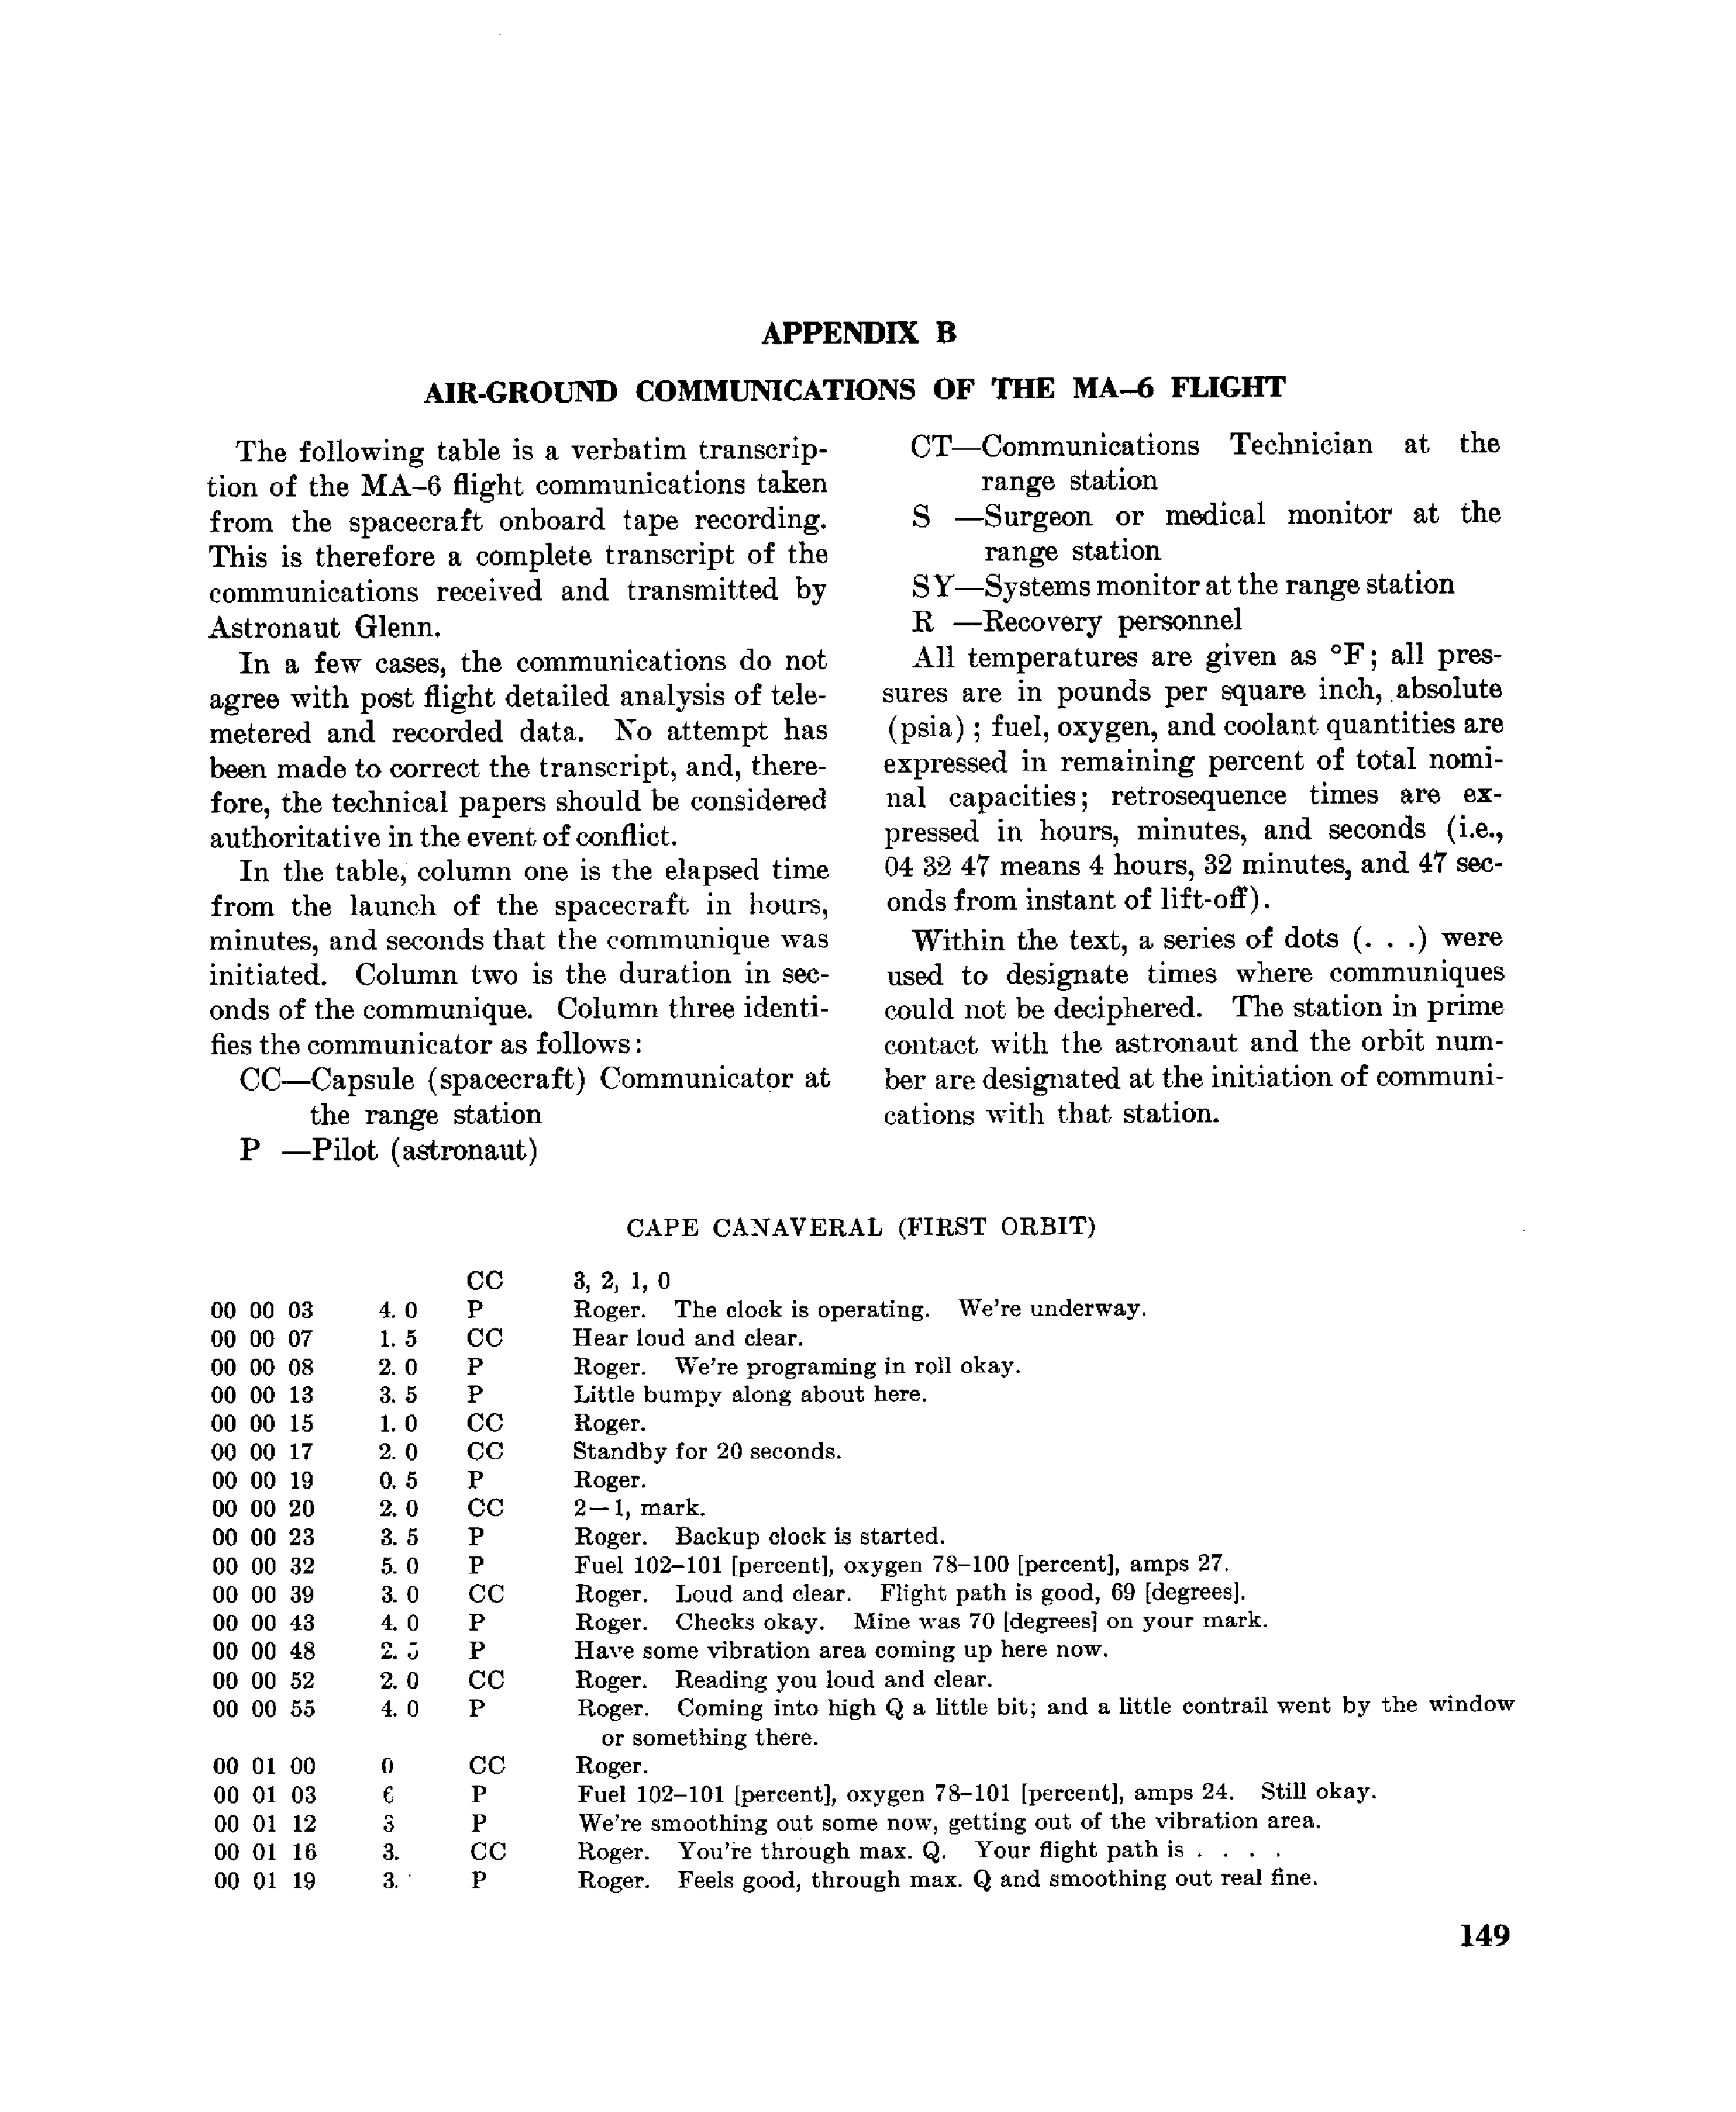 Page 148 of Mercury 6’s original transcript